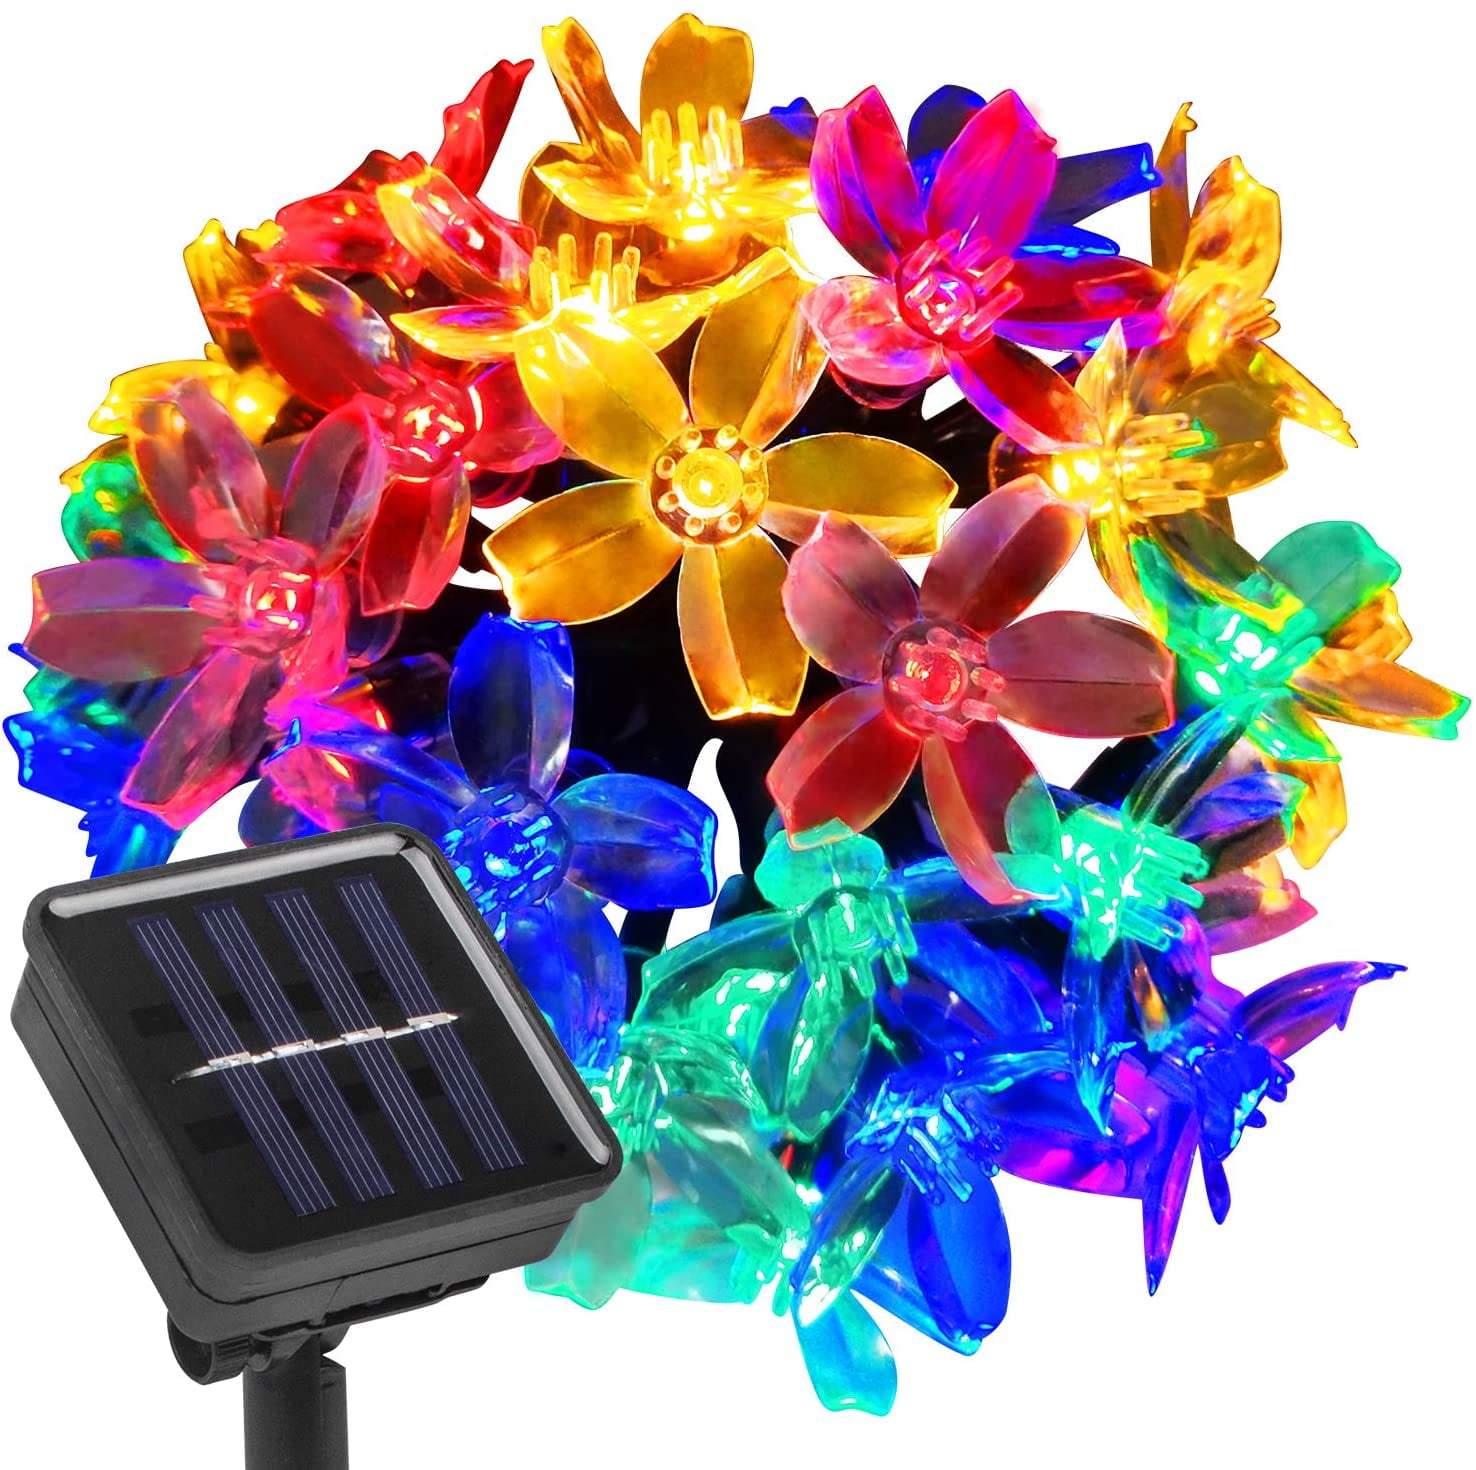 Multi-Color Patio Outdoor Fairy Light with 23ft 30 LEDs Blossom Lighting Decor for Home Garden Solar LED Flower String Light Christmas Party Wedding